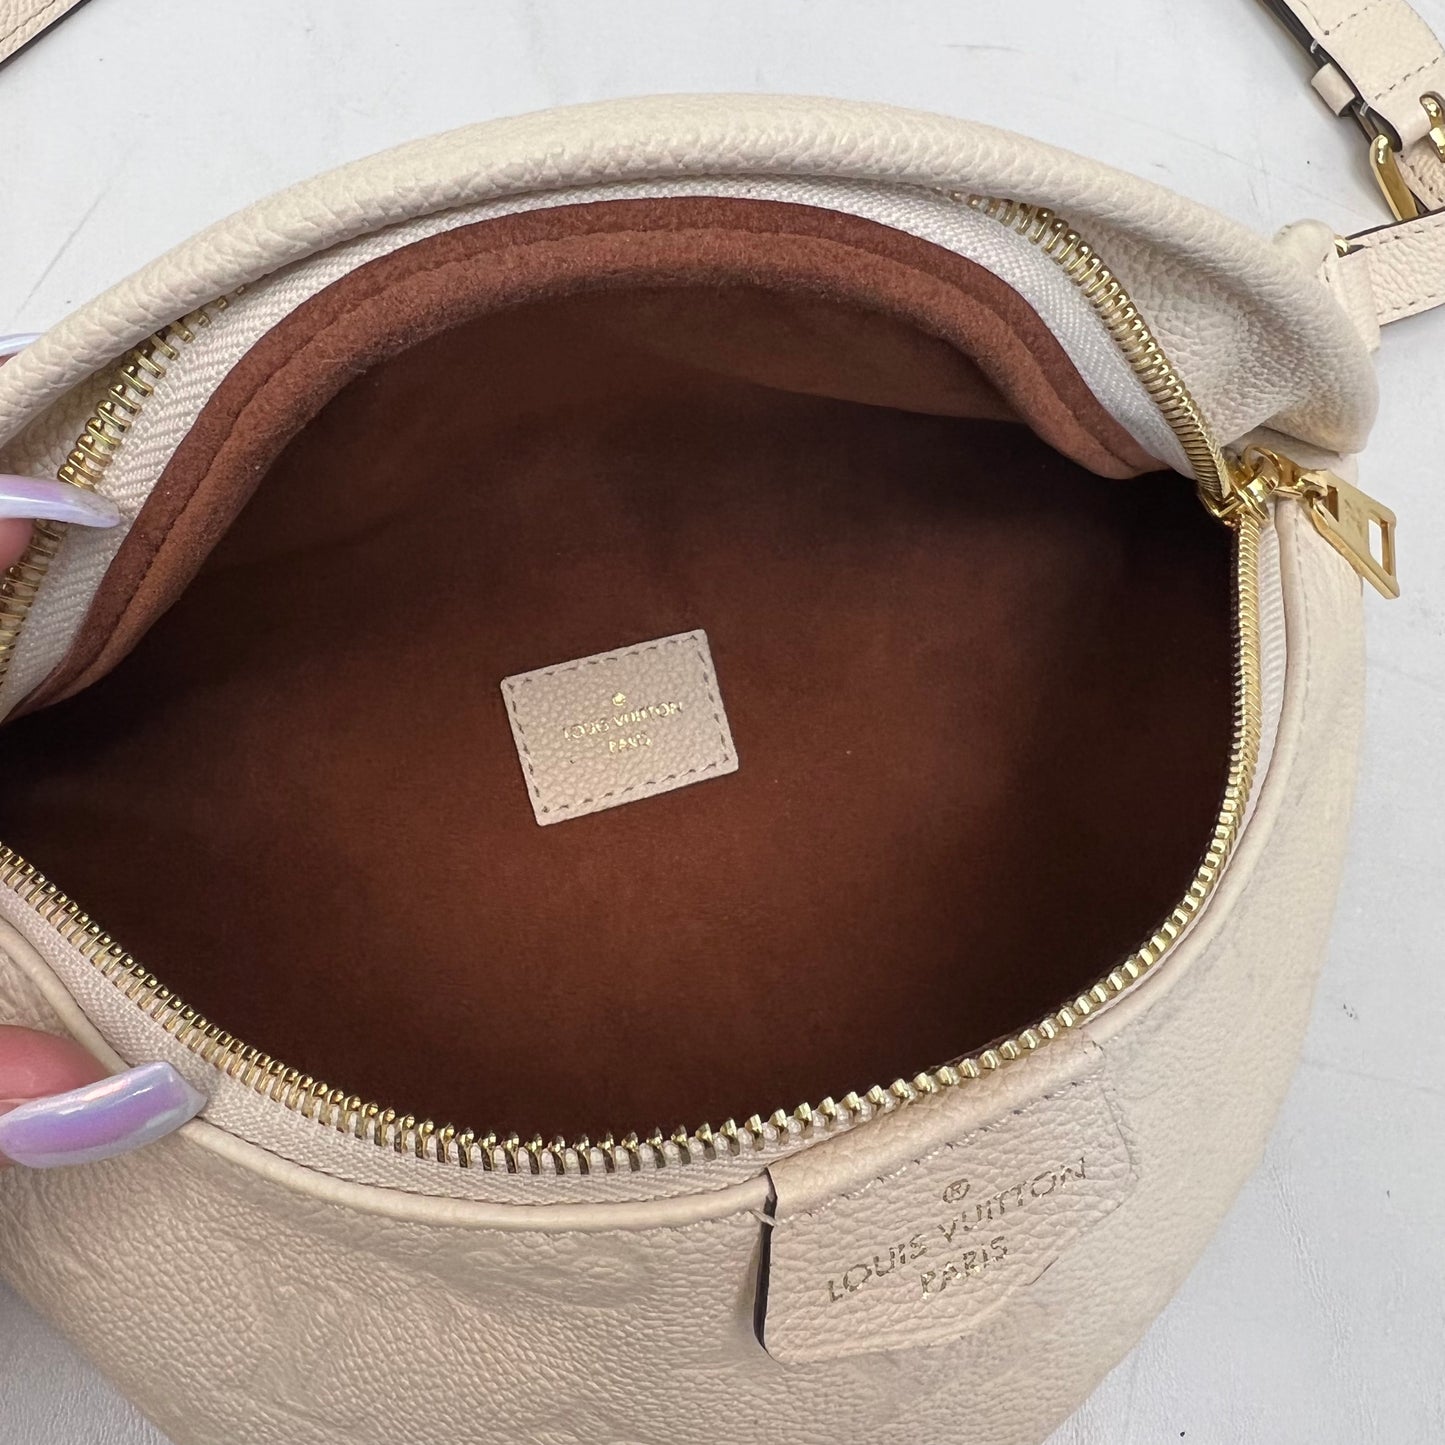 Louis Vuitton Empreinte Monogram Bumbag with Dust Bag